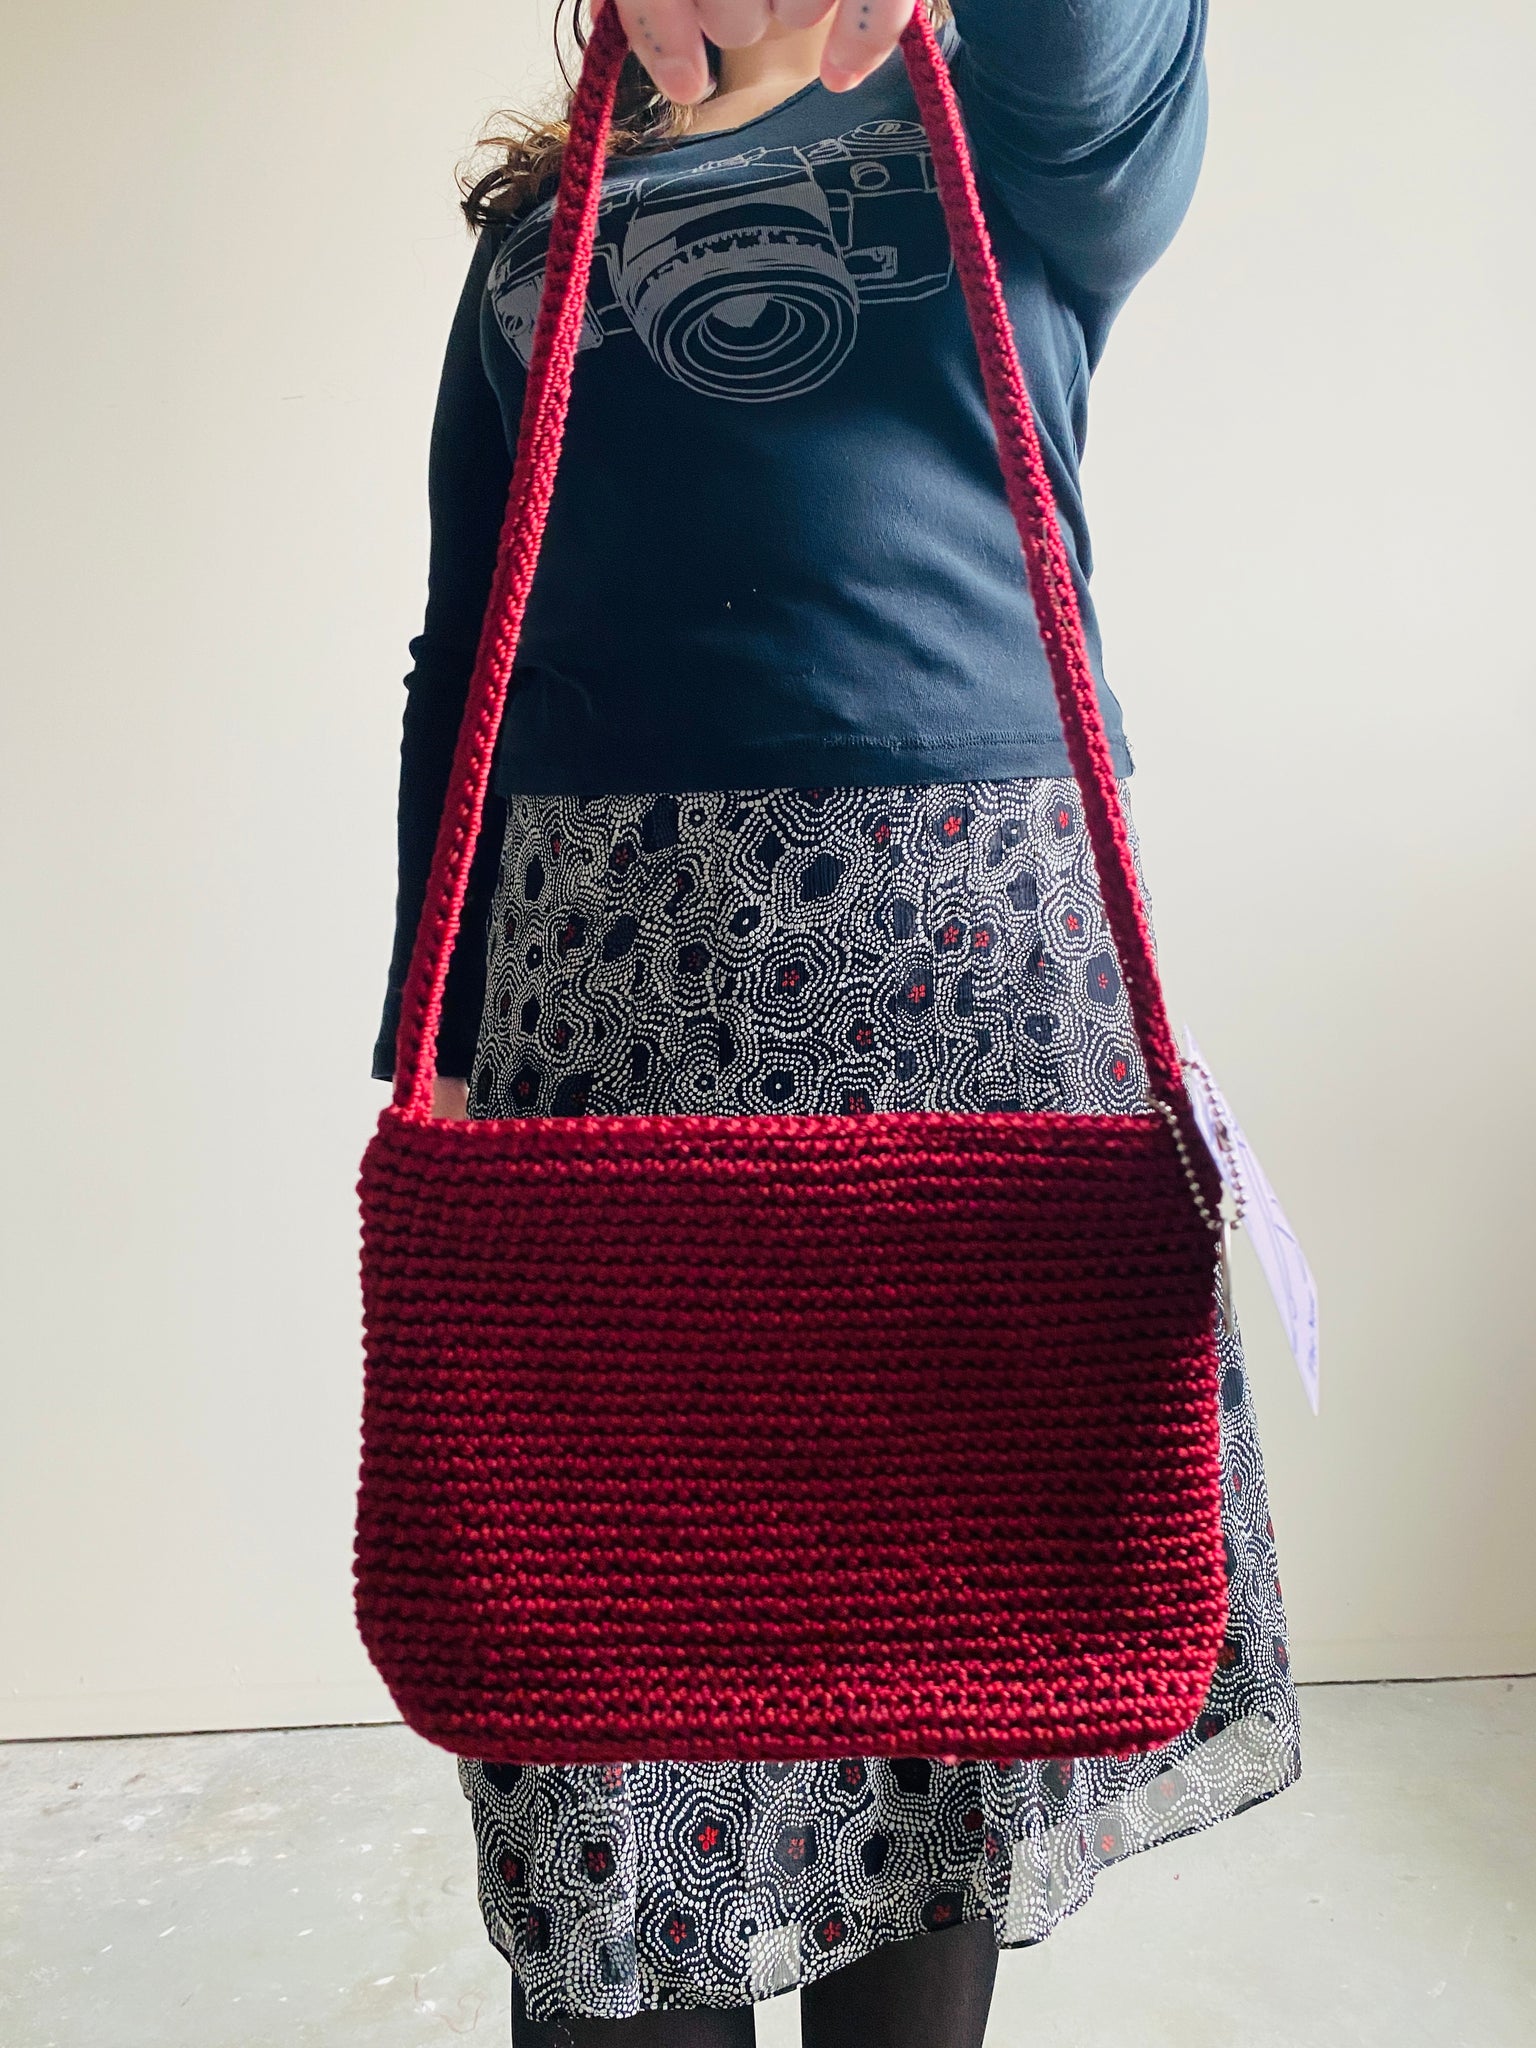 Kate Spade New York COBBLE HILL SMALL LESLIE SATCHEL Red Purse Bag | eBay